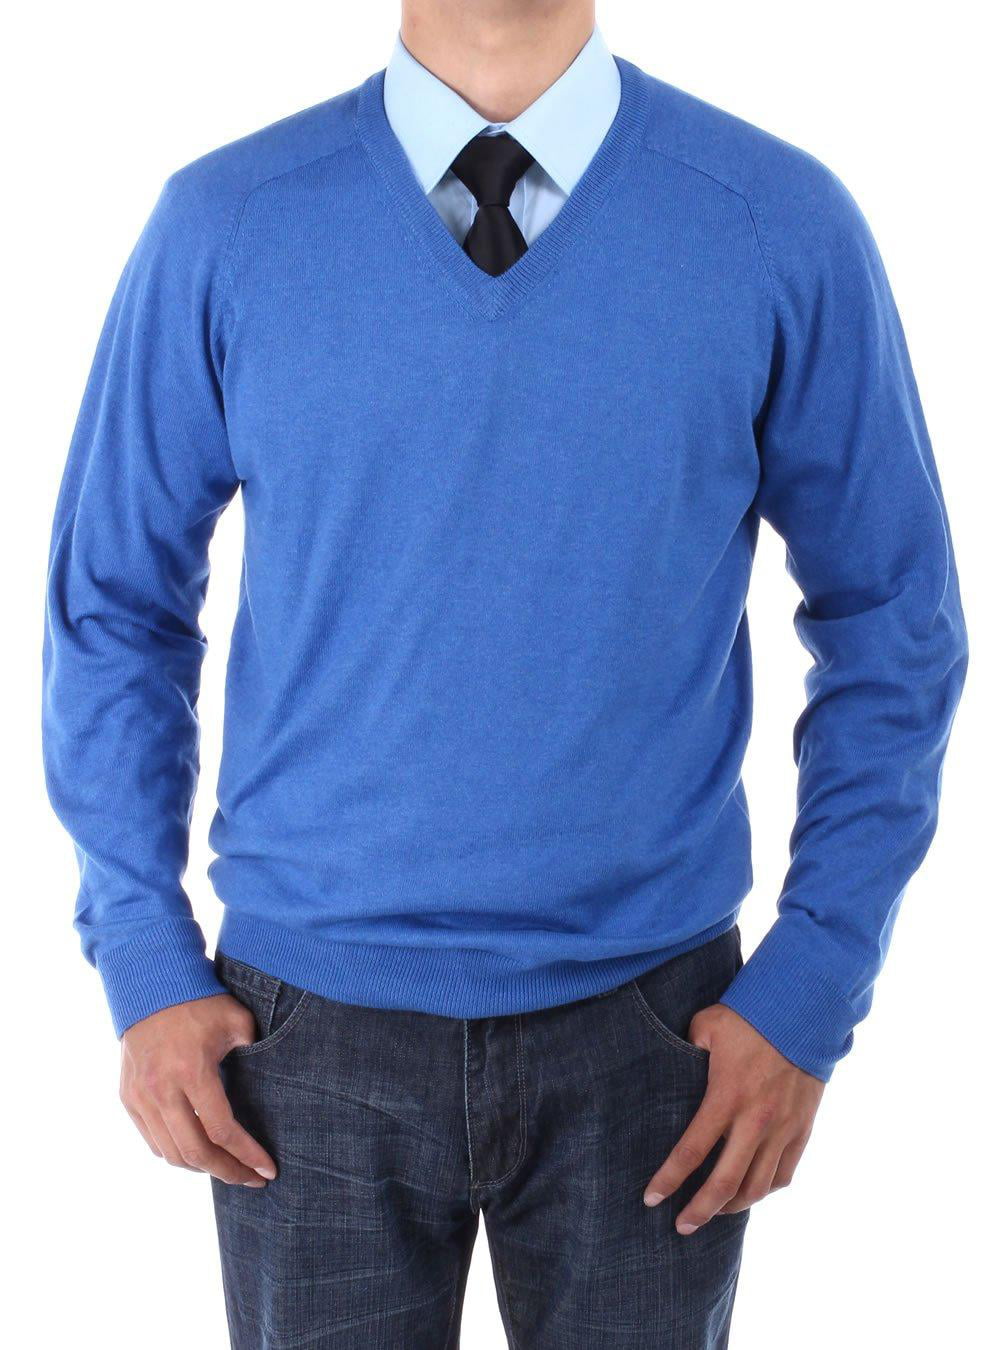 Mens Royal Blue Sweater Luciano Natazzi Pullover V-Neck - Walmart.com